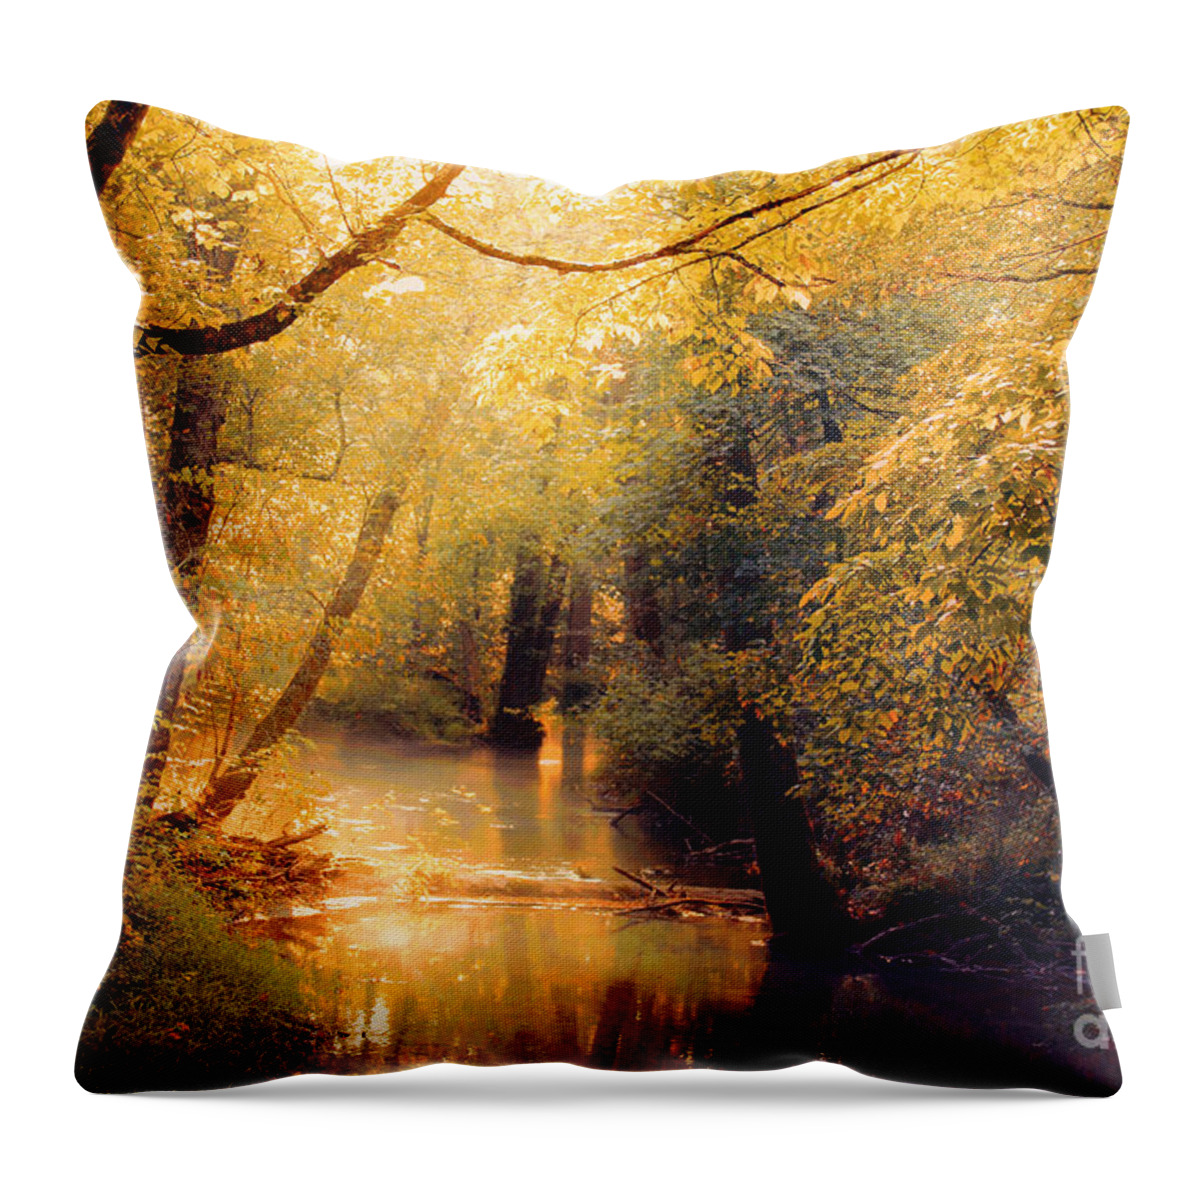 Gold Throw Pillow featuring the photograph Golden Light by Geraldine DeBoer